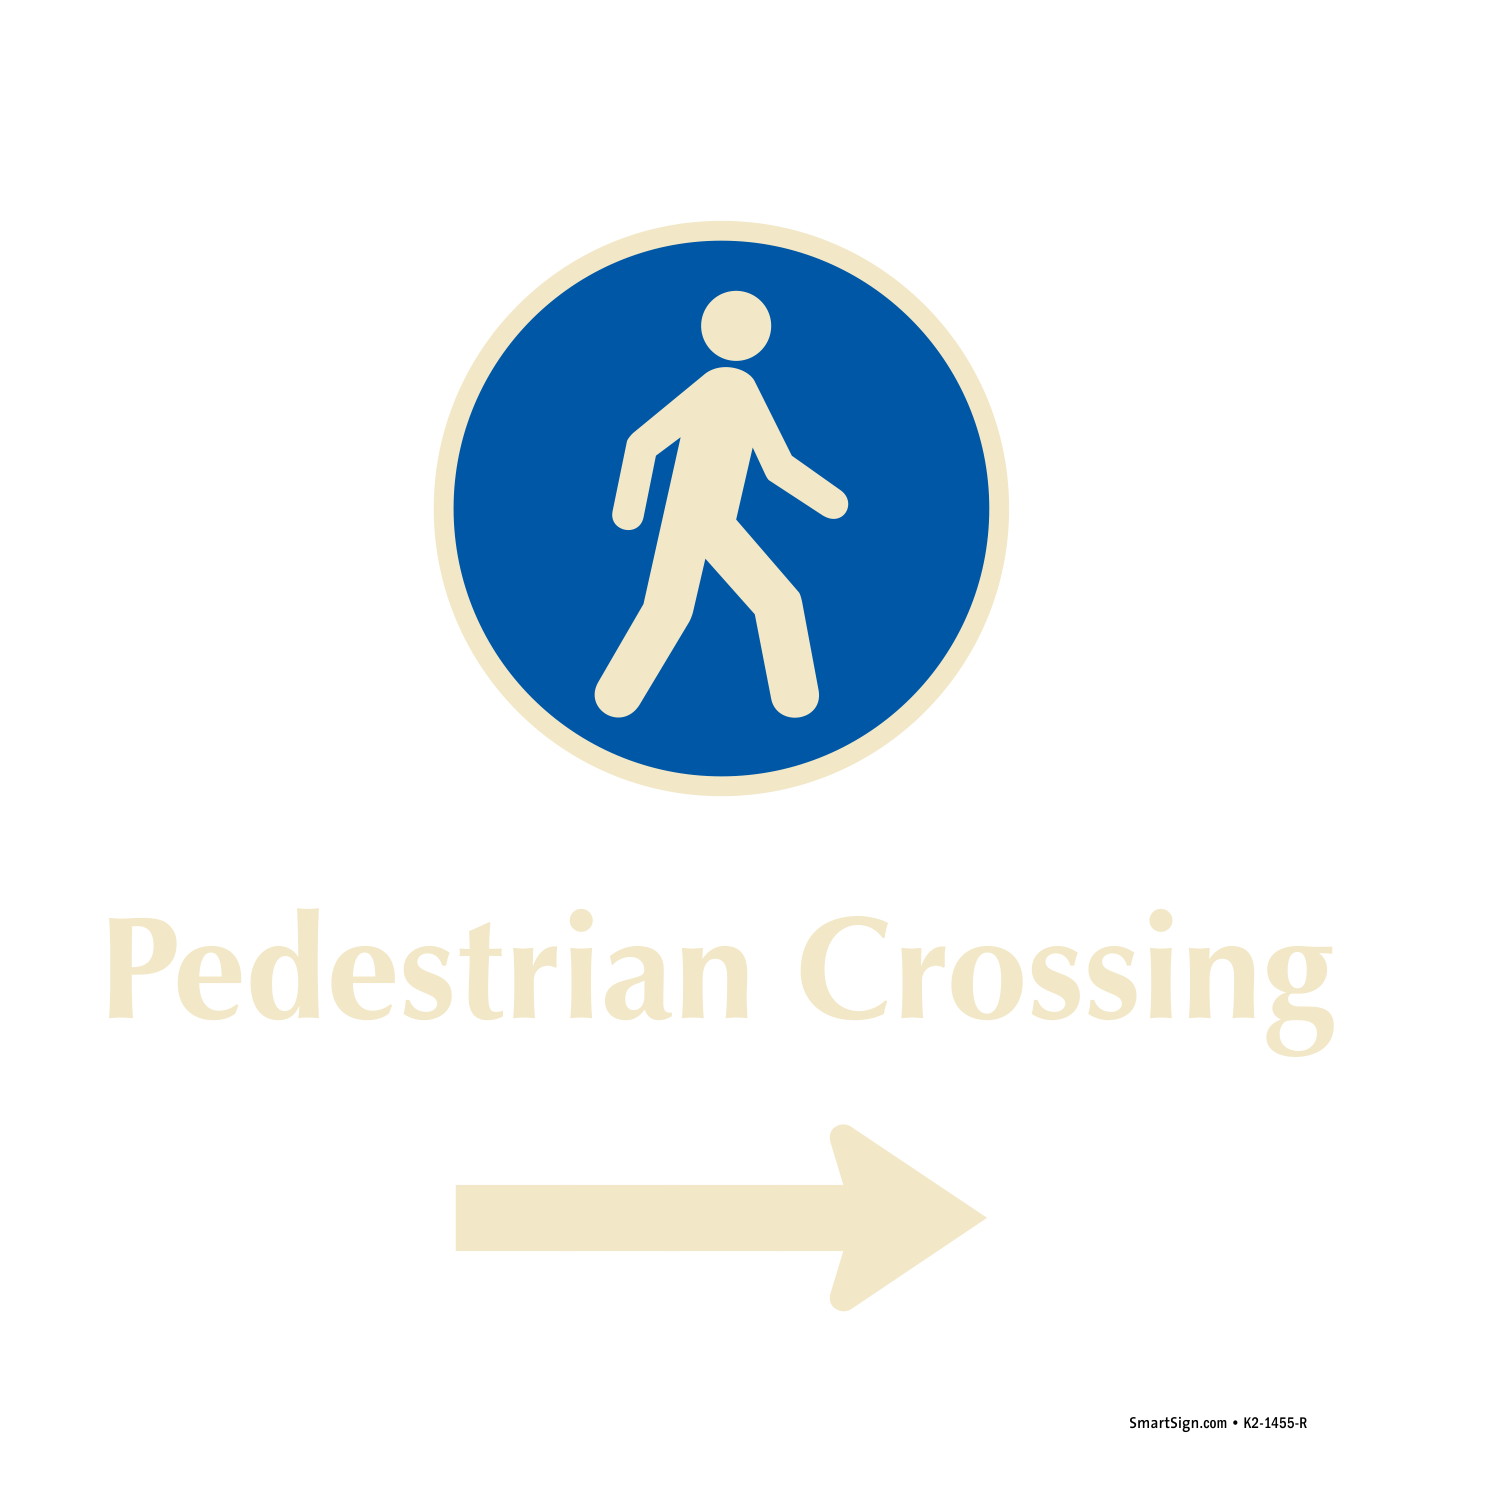 Designer Pedestrian Crossing Sign with Arrow